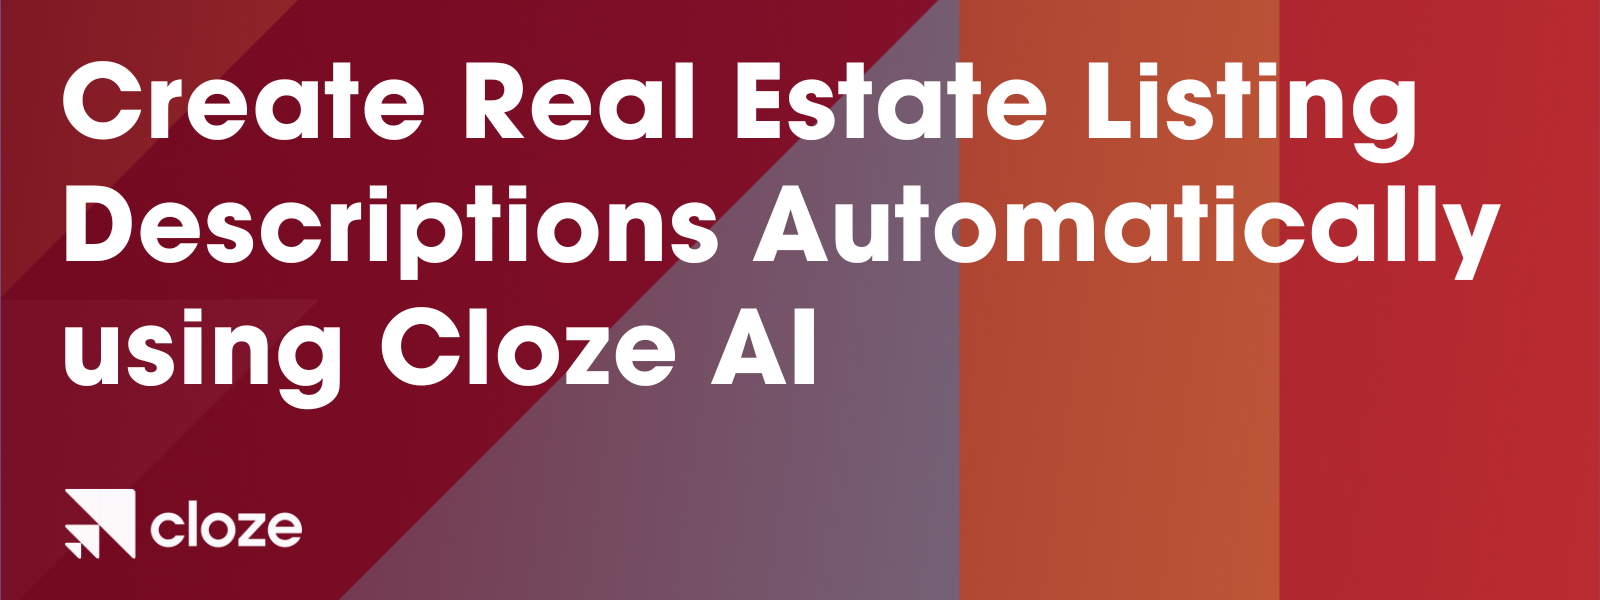 Create Real Estate Listing Descriptions Automatically using Cloze AI